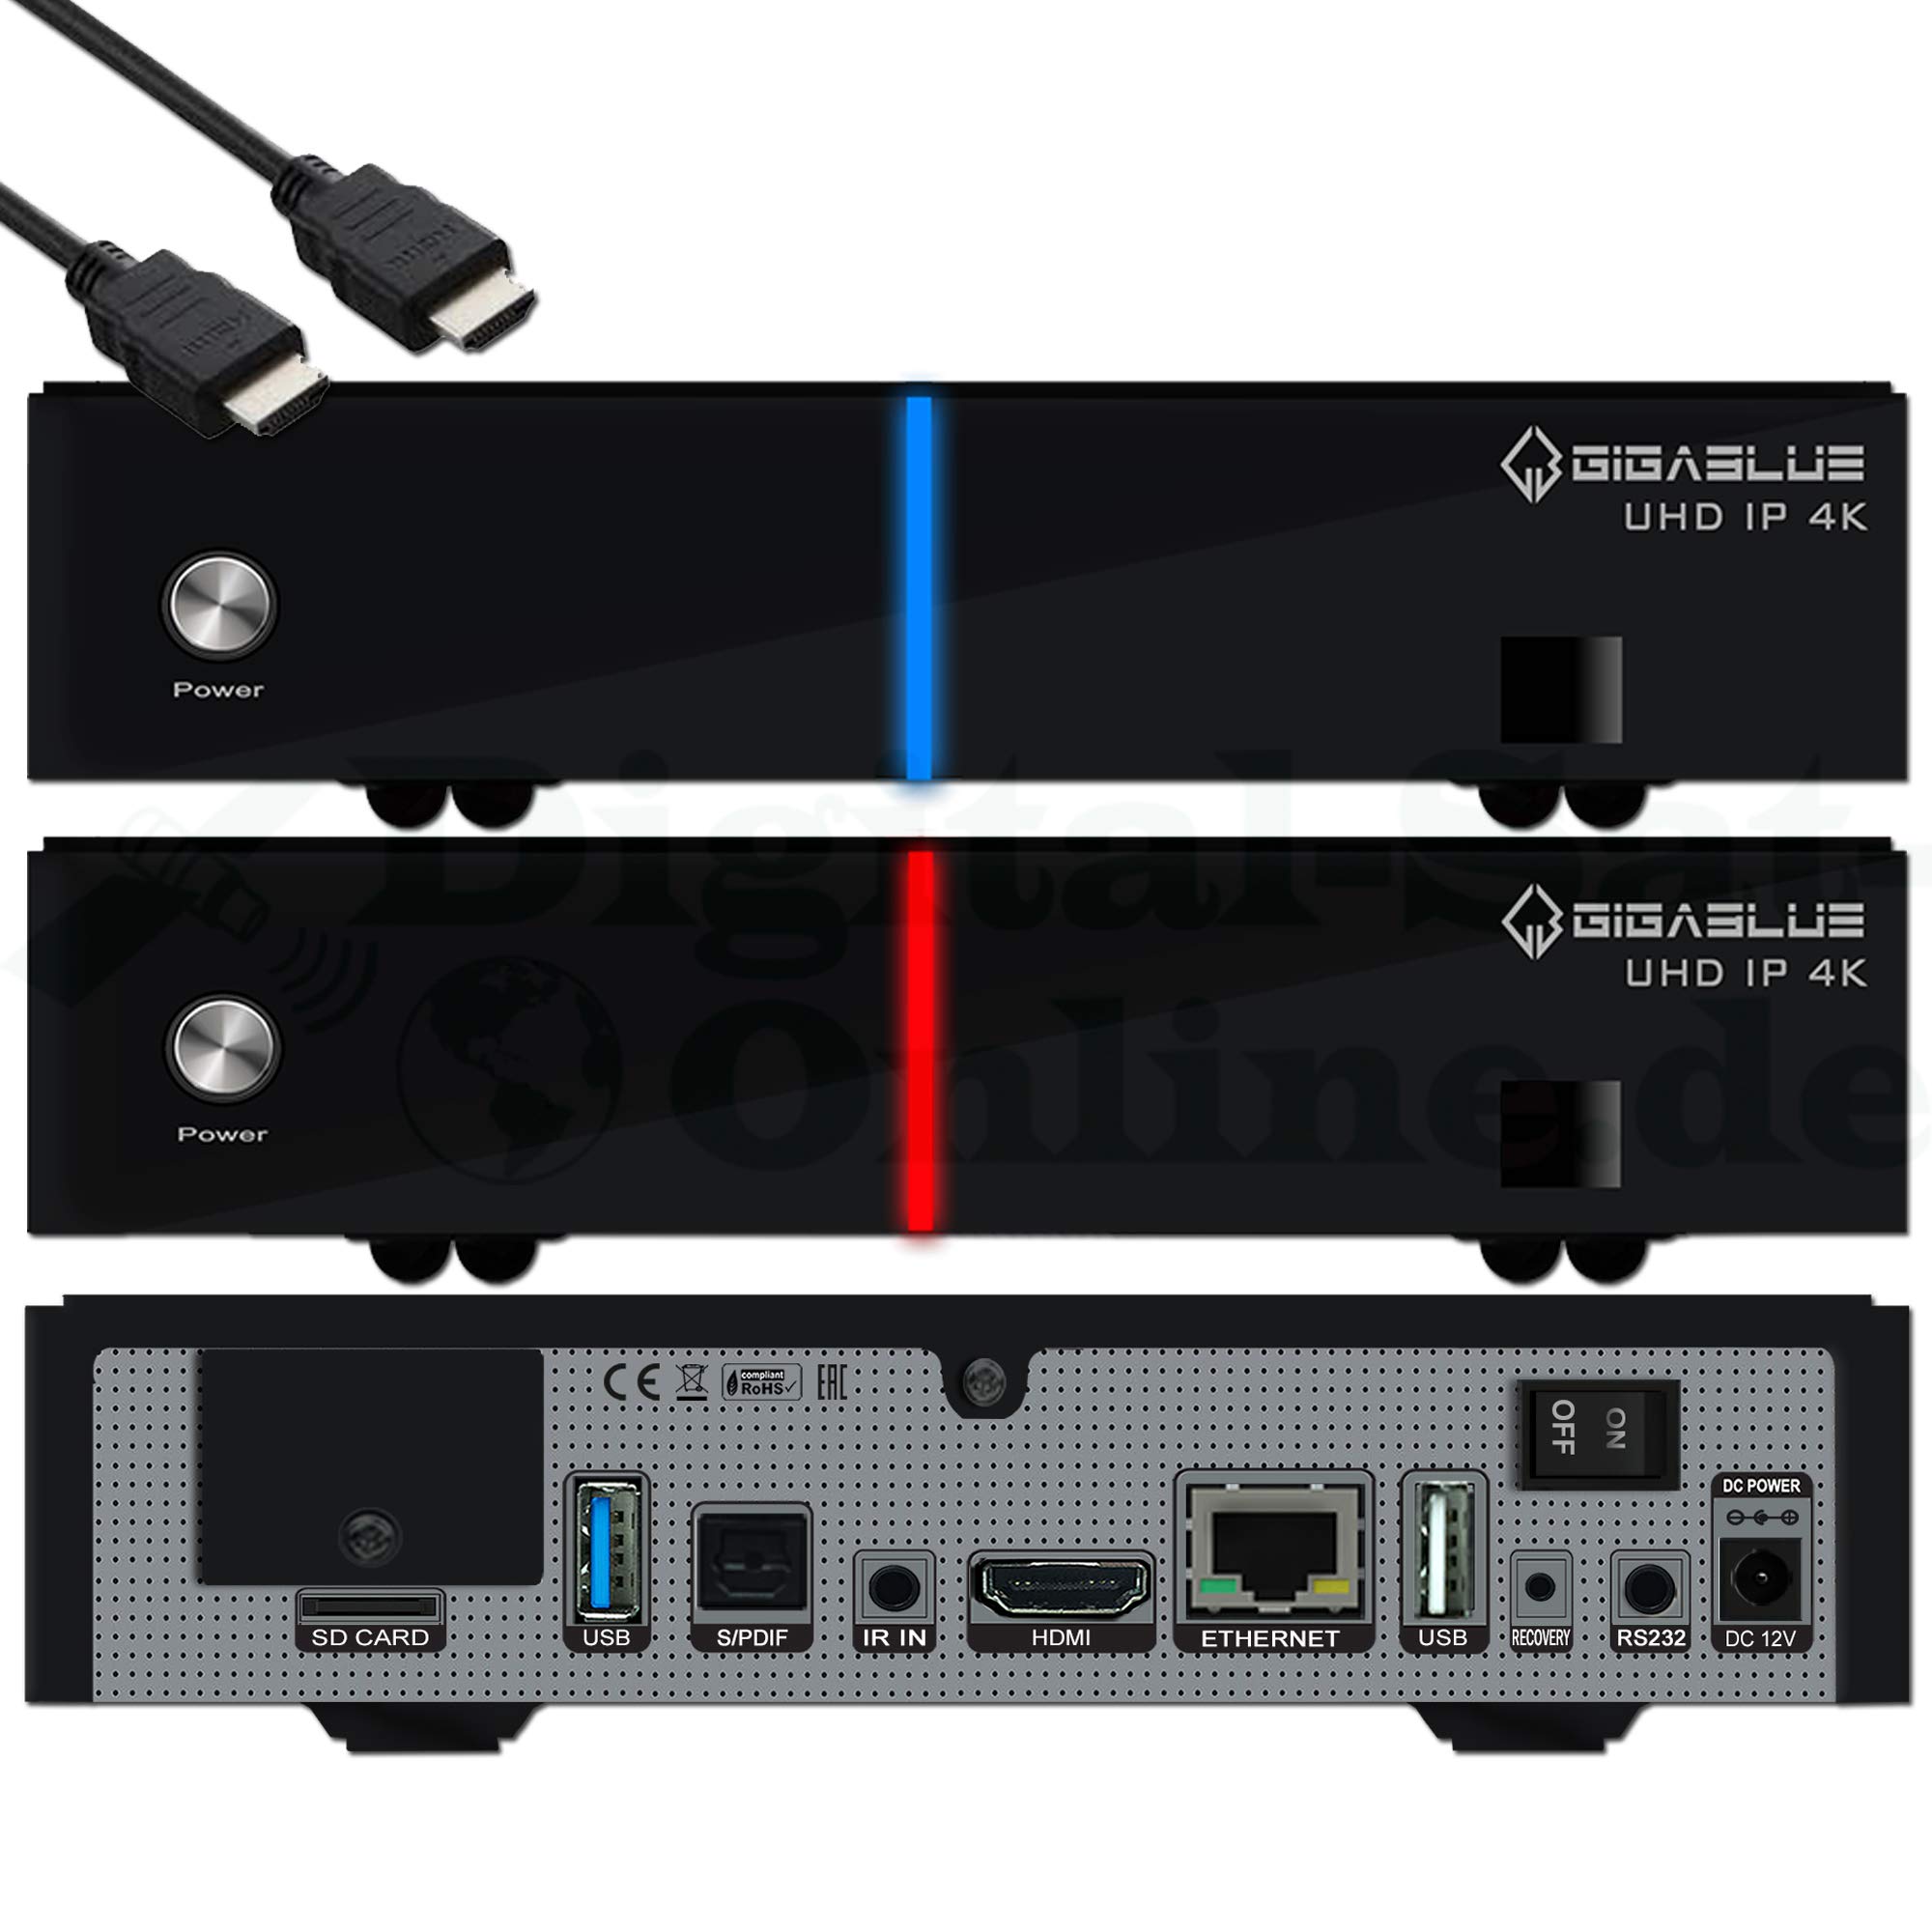 GigaBlue 4K UHD IP Box Multiroom Client - E2 IPTV Smart TV Box und Media Server mit PVR Funktion - optional zu DVBT2, digital Kabel- oder Sat IP Receiver erweiterbar, inklusive HDMI-Kabel